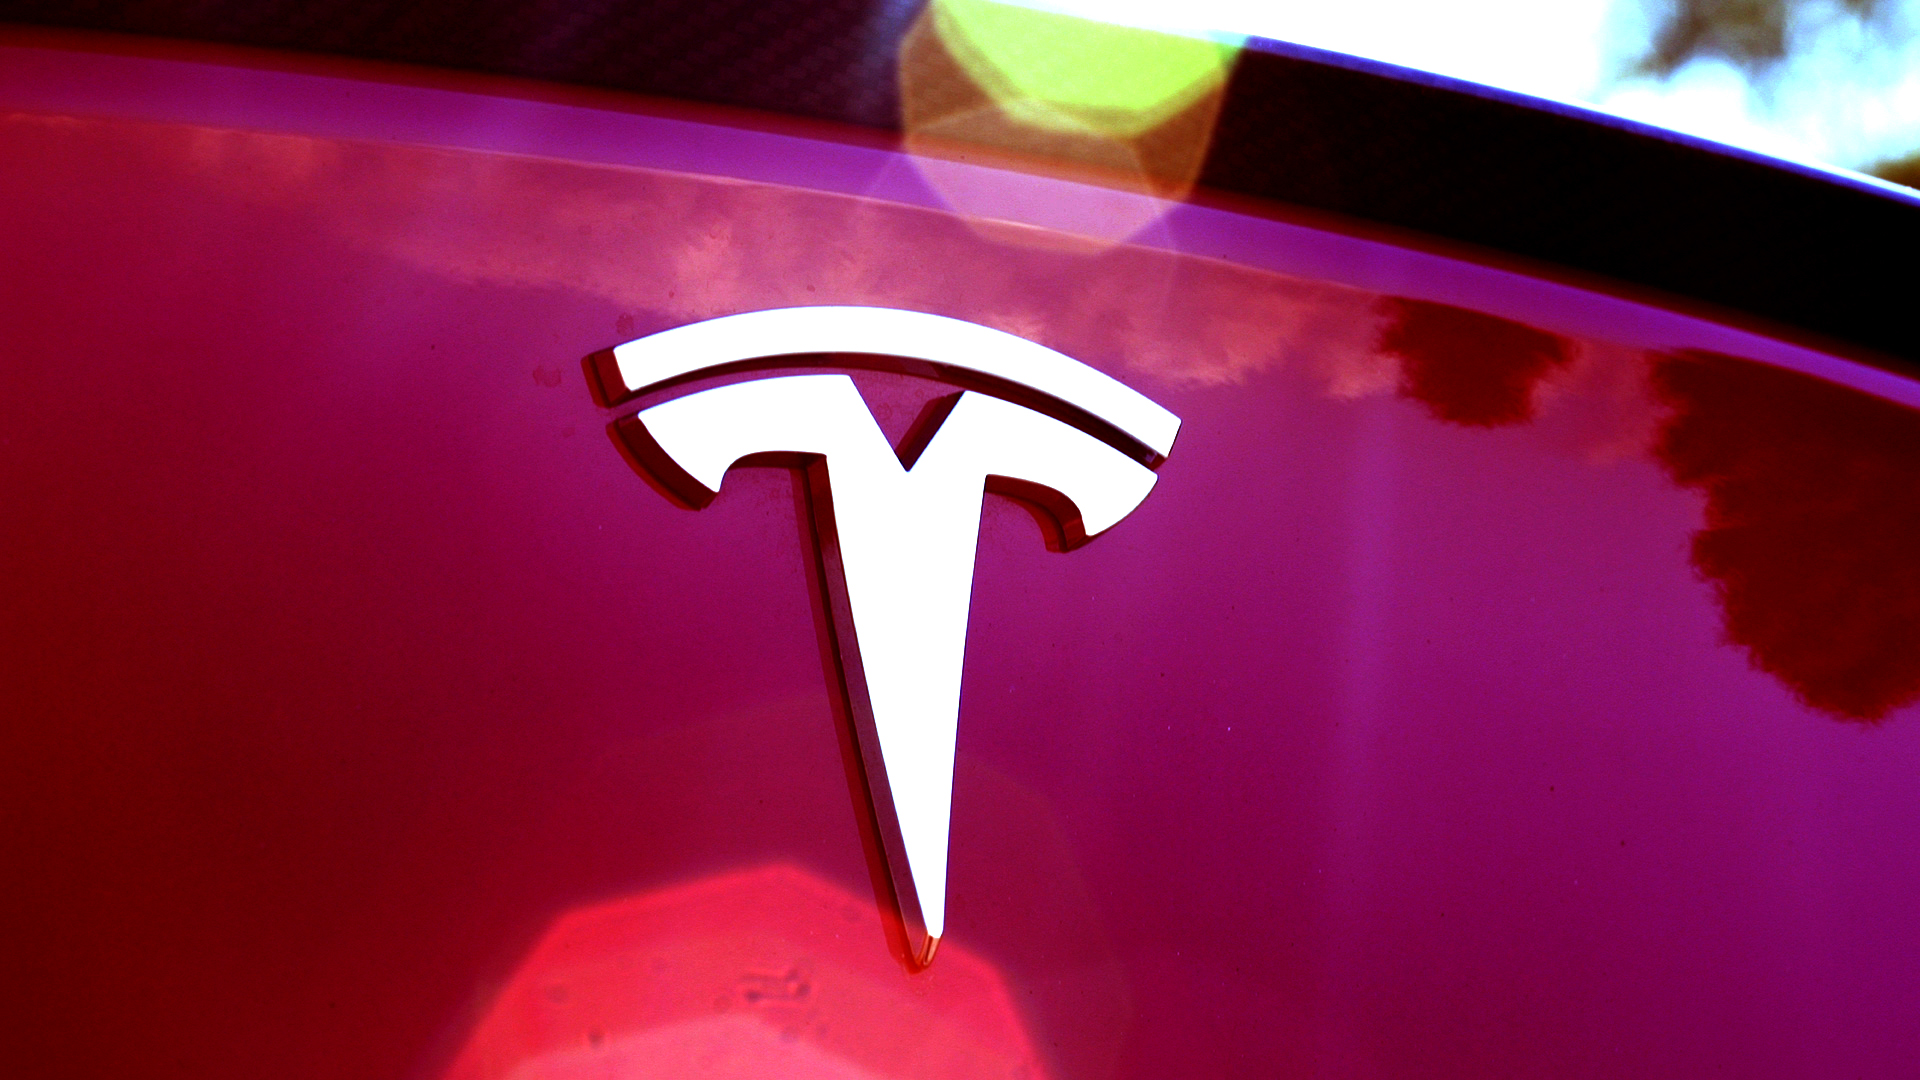 NHTSA Is Looking Into Fatal Crash Of Tesla Model S In Autopilot Mode